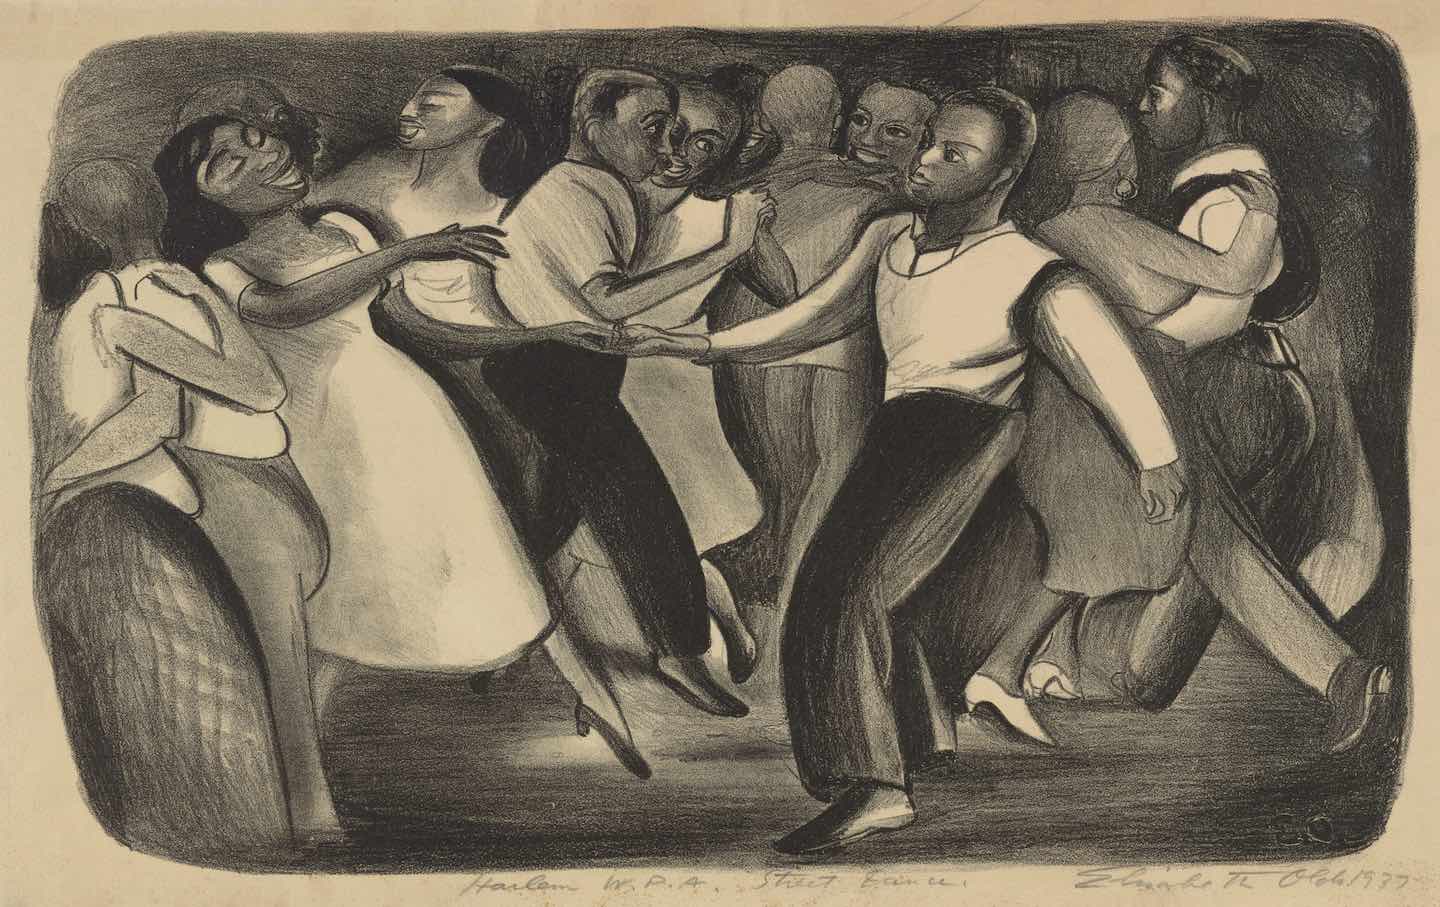 «Harlem WPA Street Dance», d'Elizabeth Olds, vers 1935-1943.